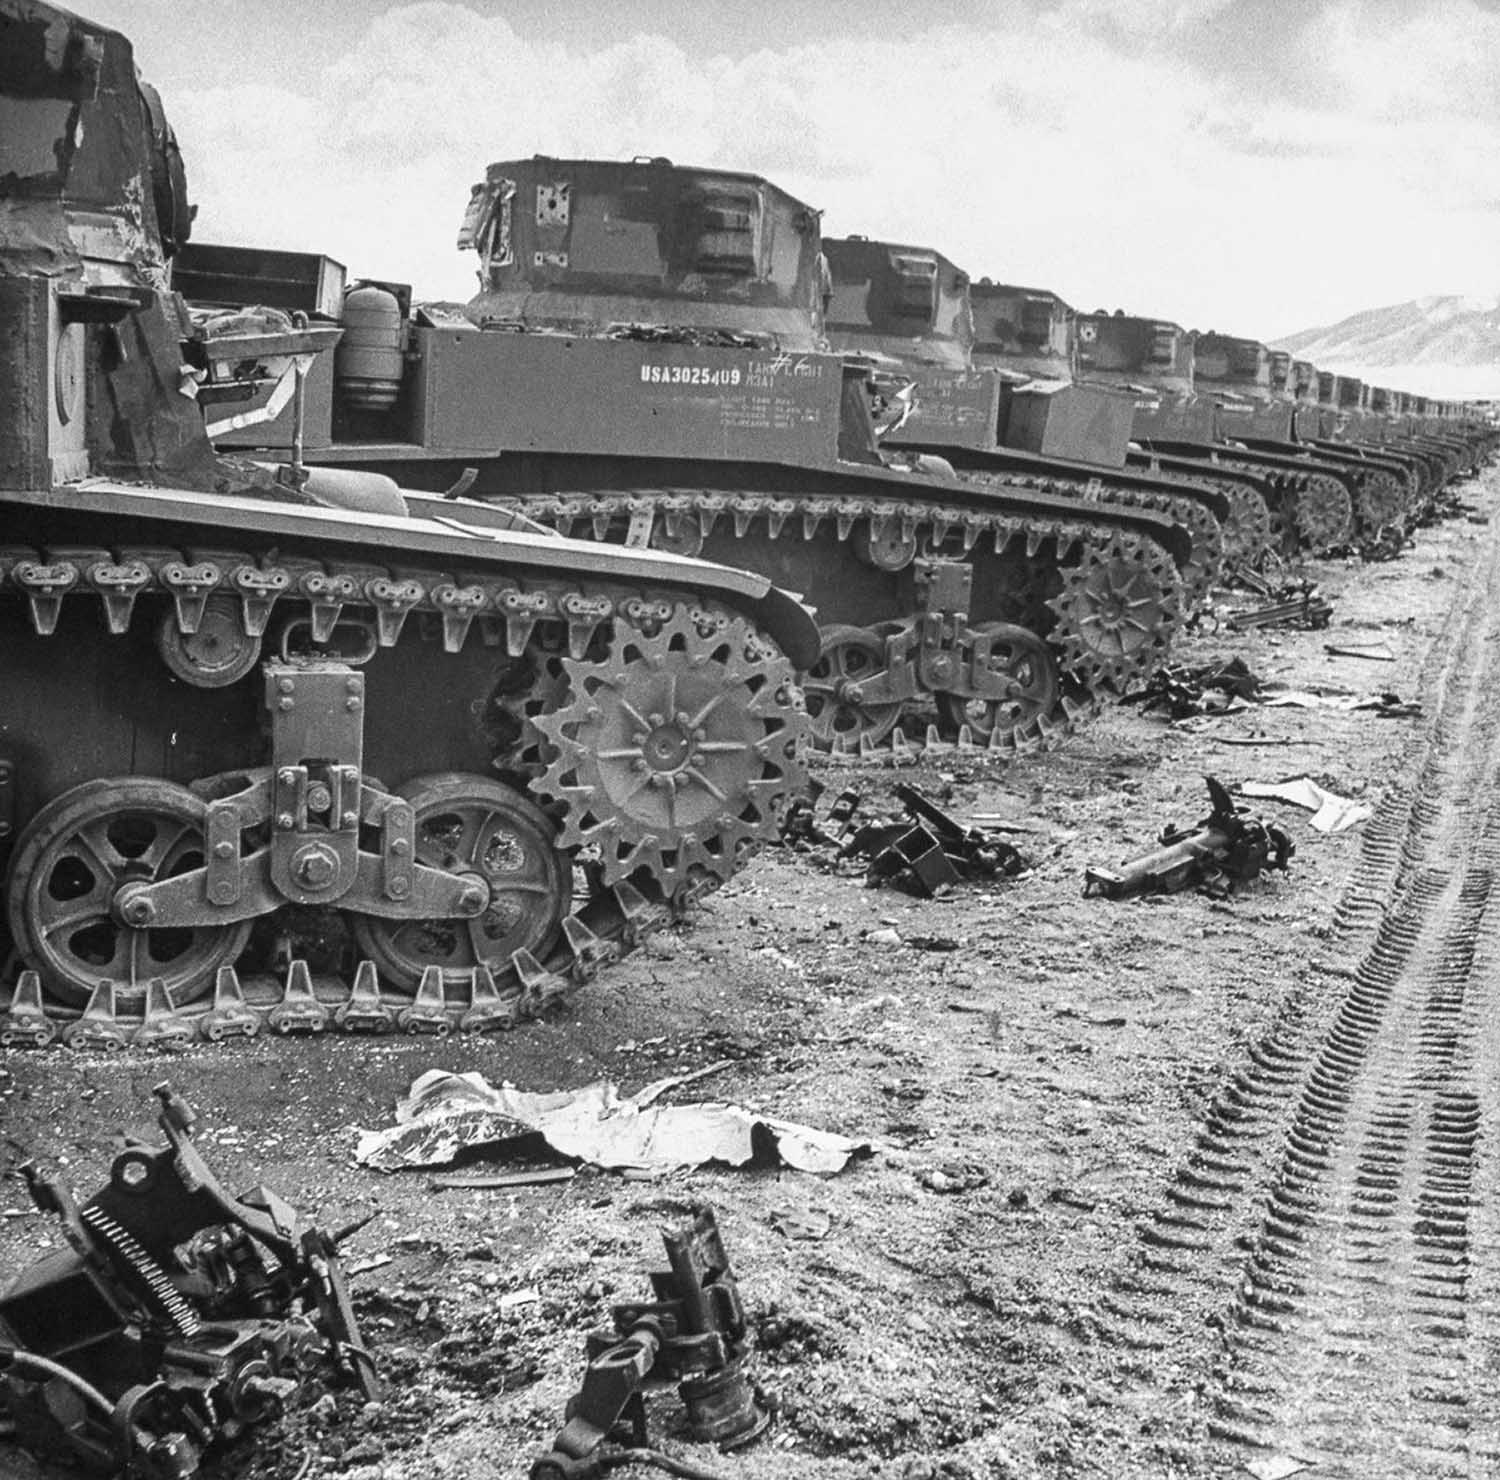 Obsolete M3A1 Light tanks sit in a U.S. Army depot, 1946.